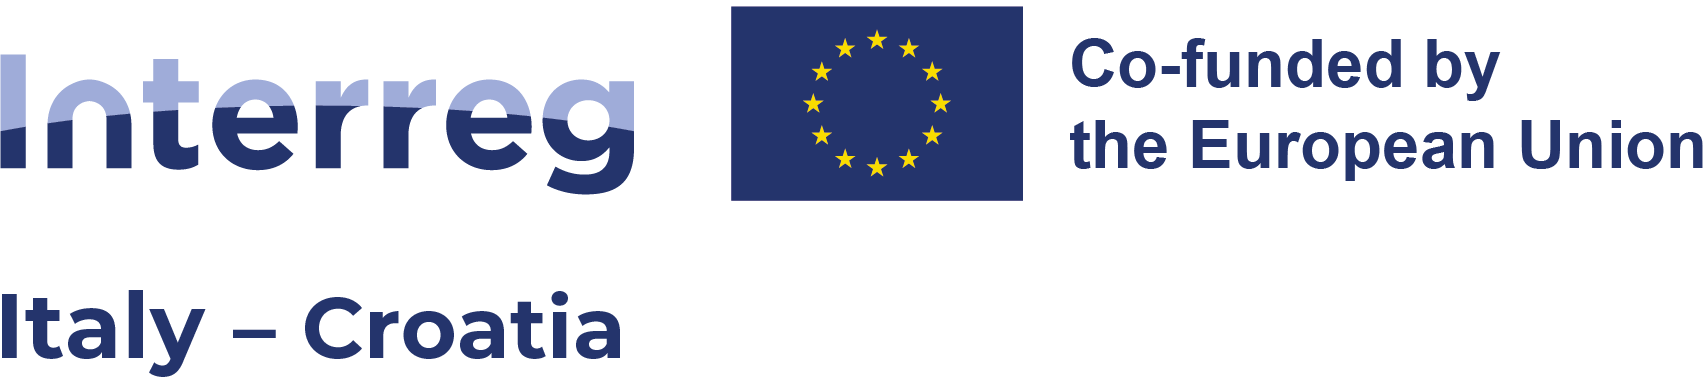 Logo Interreg - Co-funded by European Union